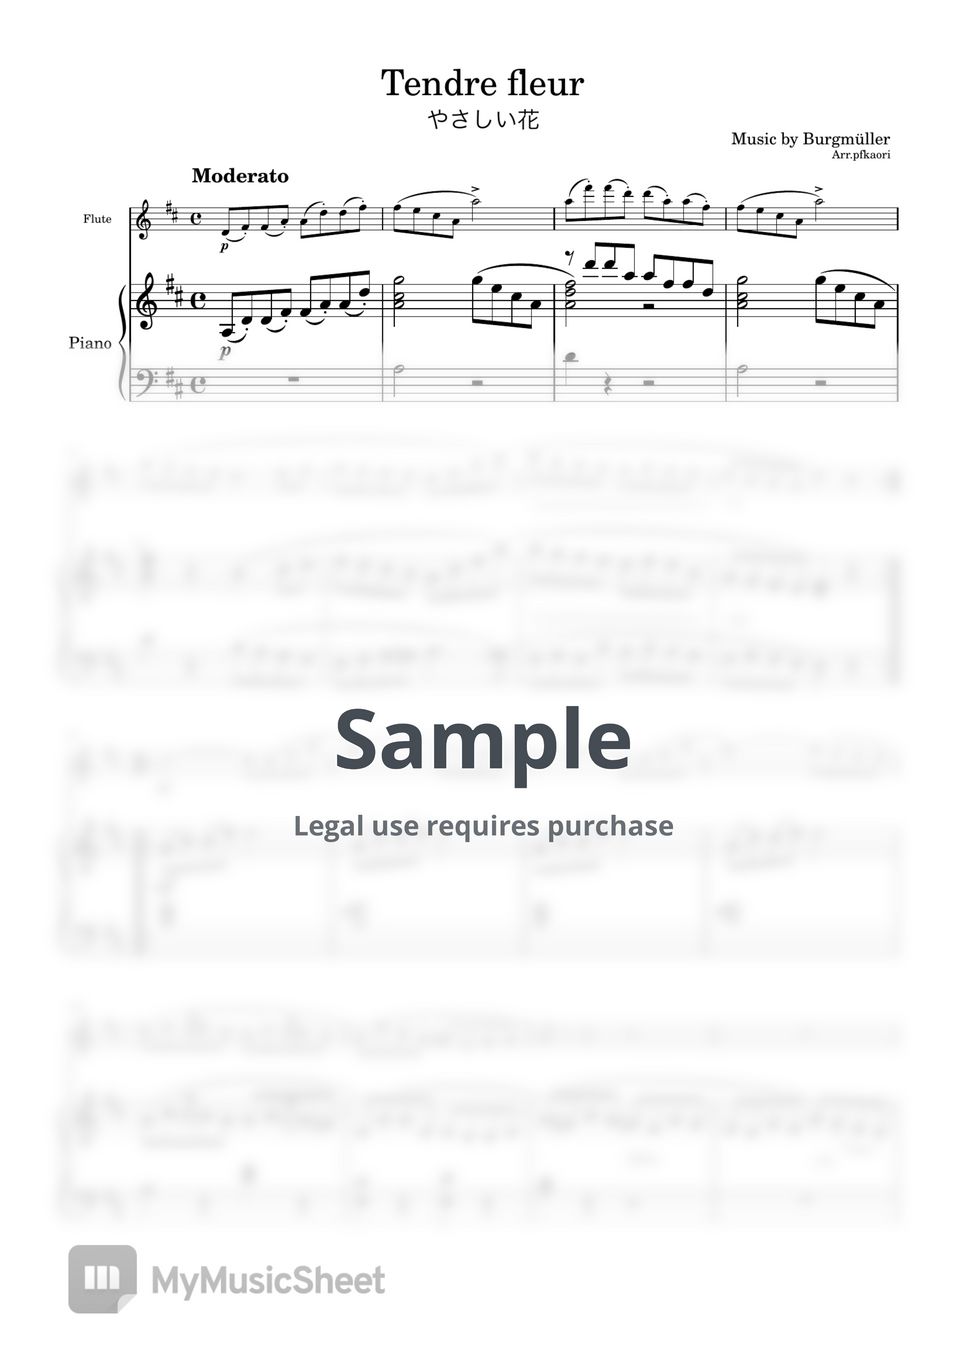 Burgmüller - Tendre fleur (flute & piano) by pfkaori